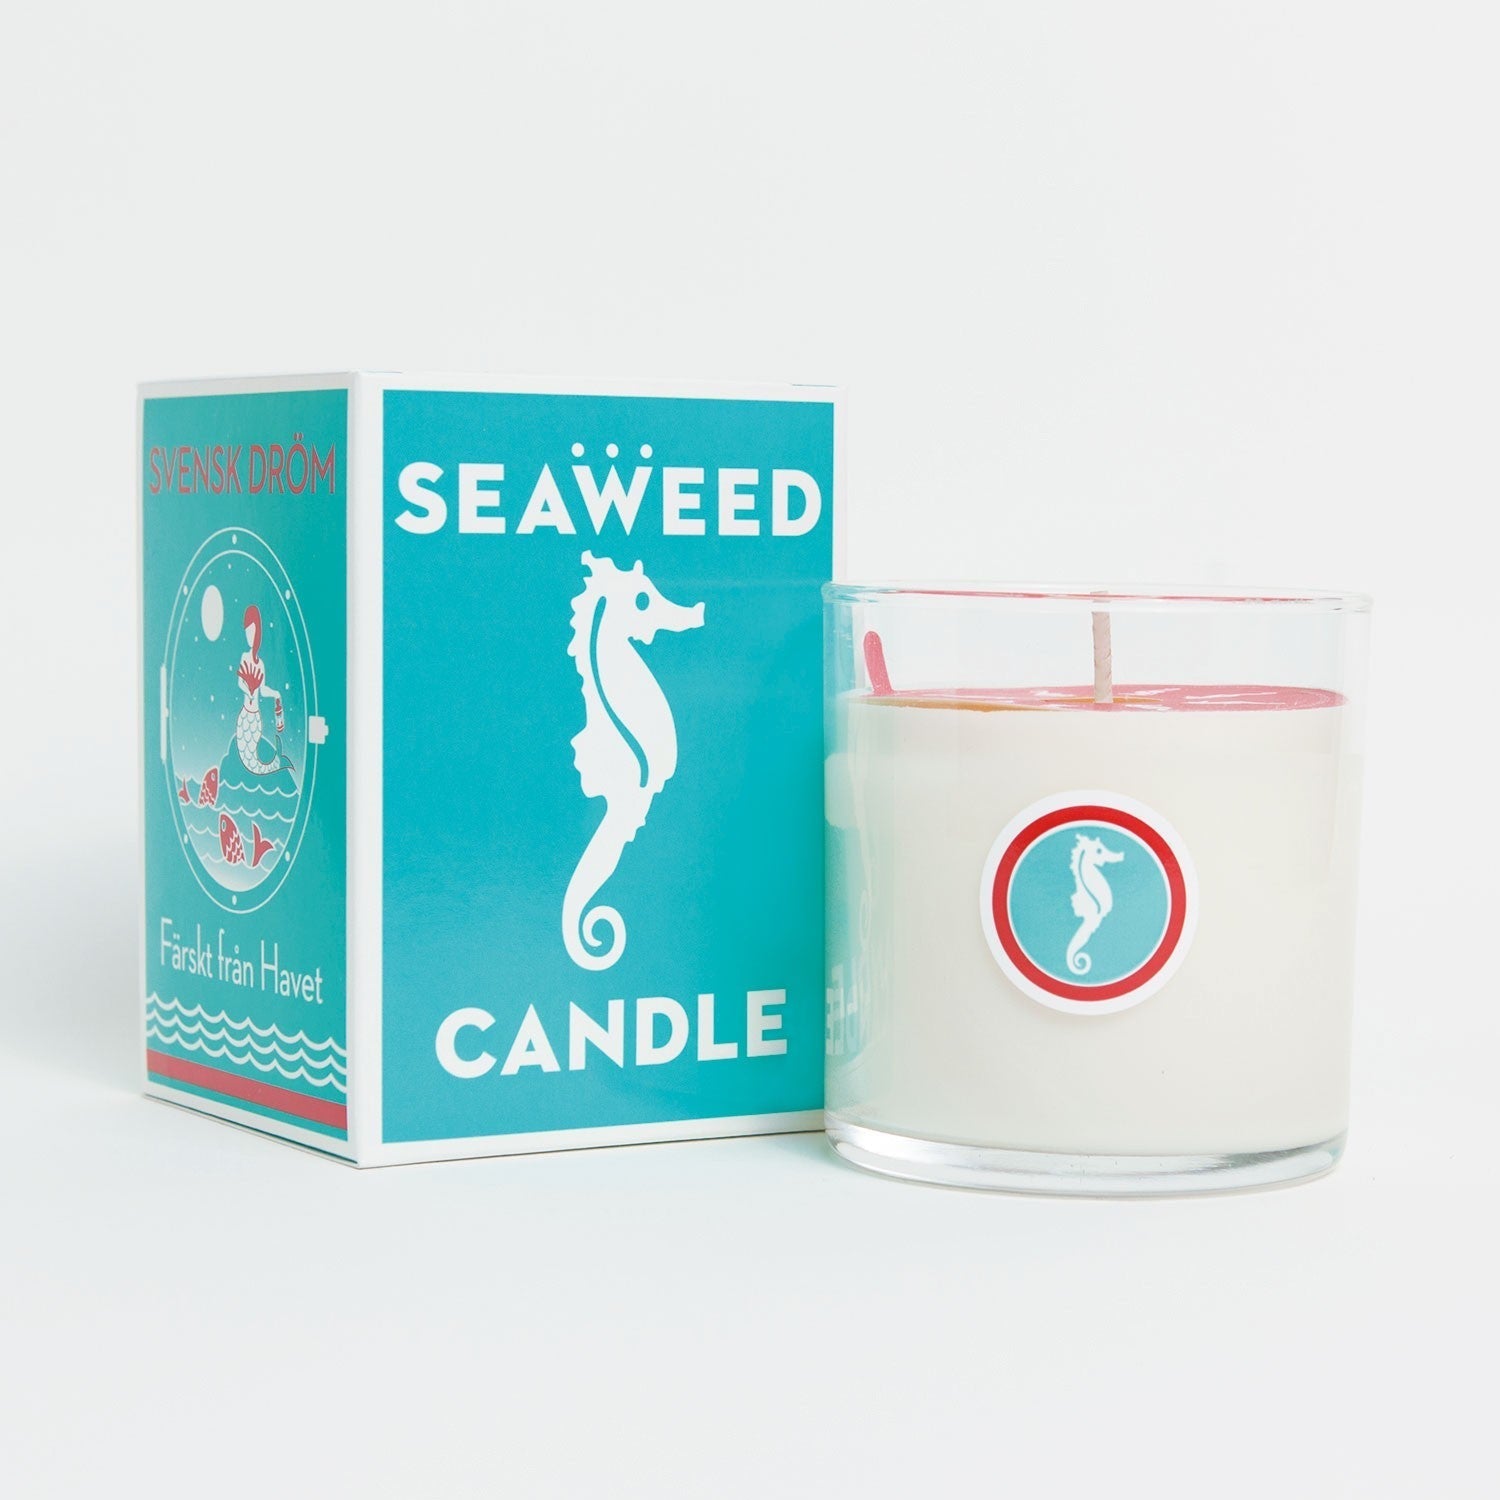 Swedish Dream Seaweed Candle - Mellow Monkey